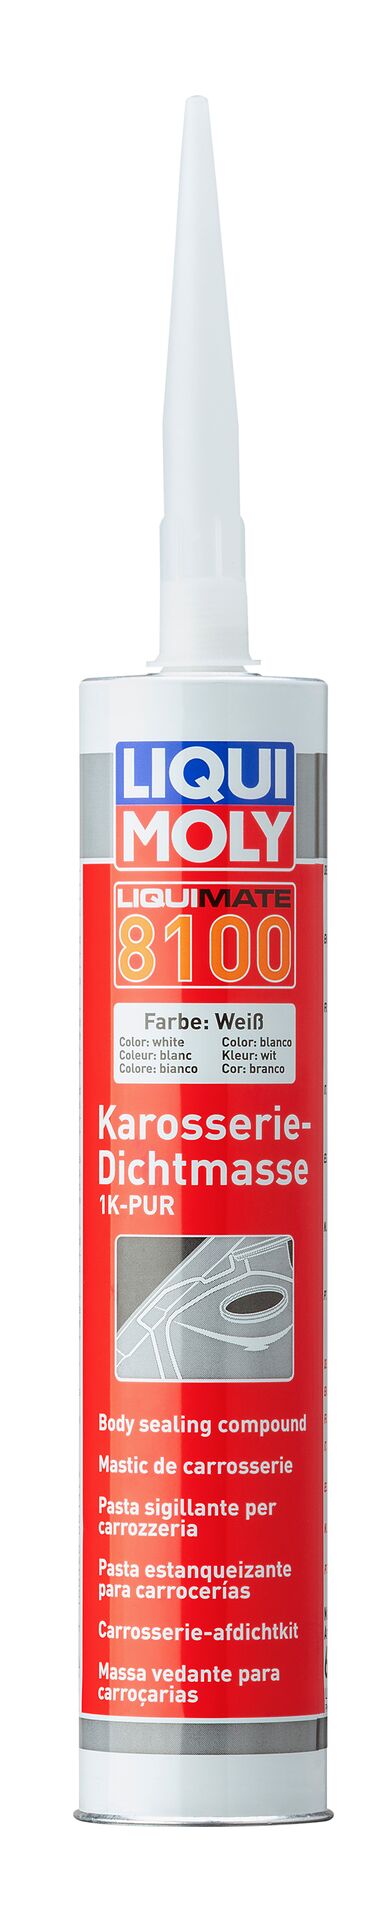 LIQUI-MOLY Klebdichtstoff 1K-PUR weiss 300 ml Liquimate 8100